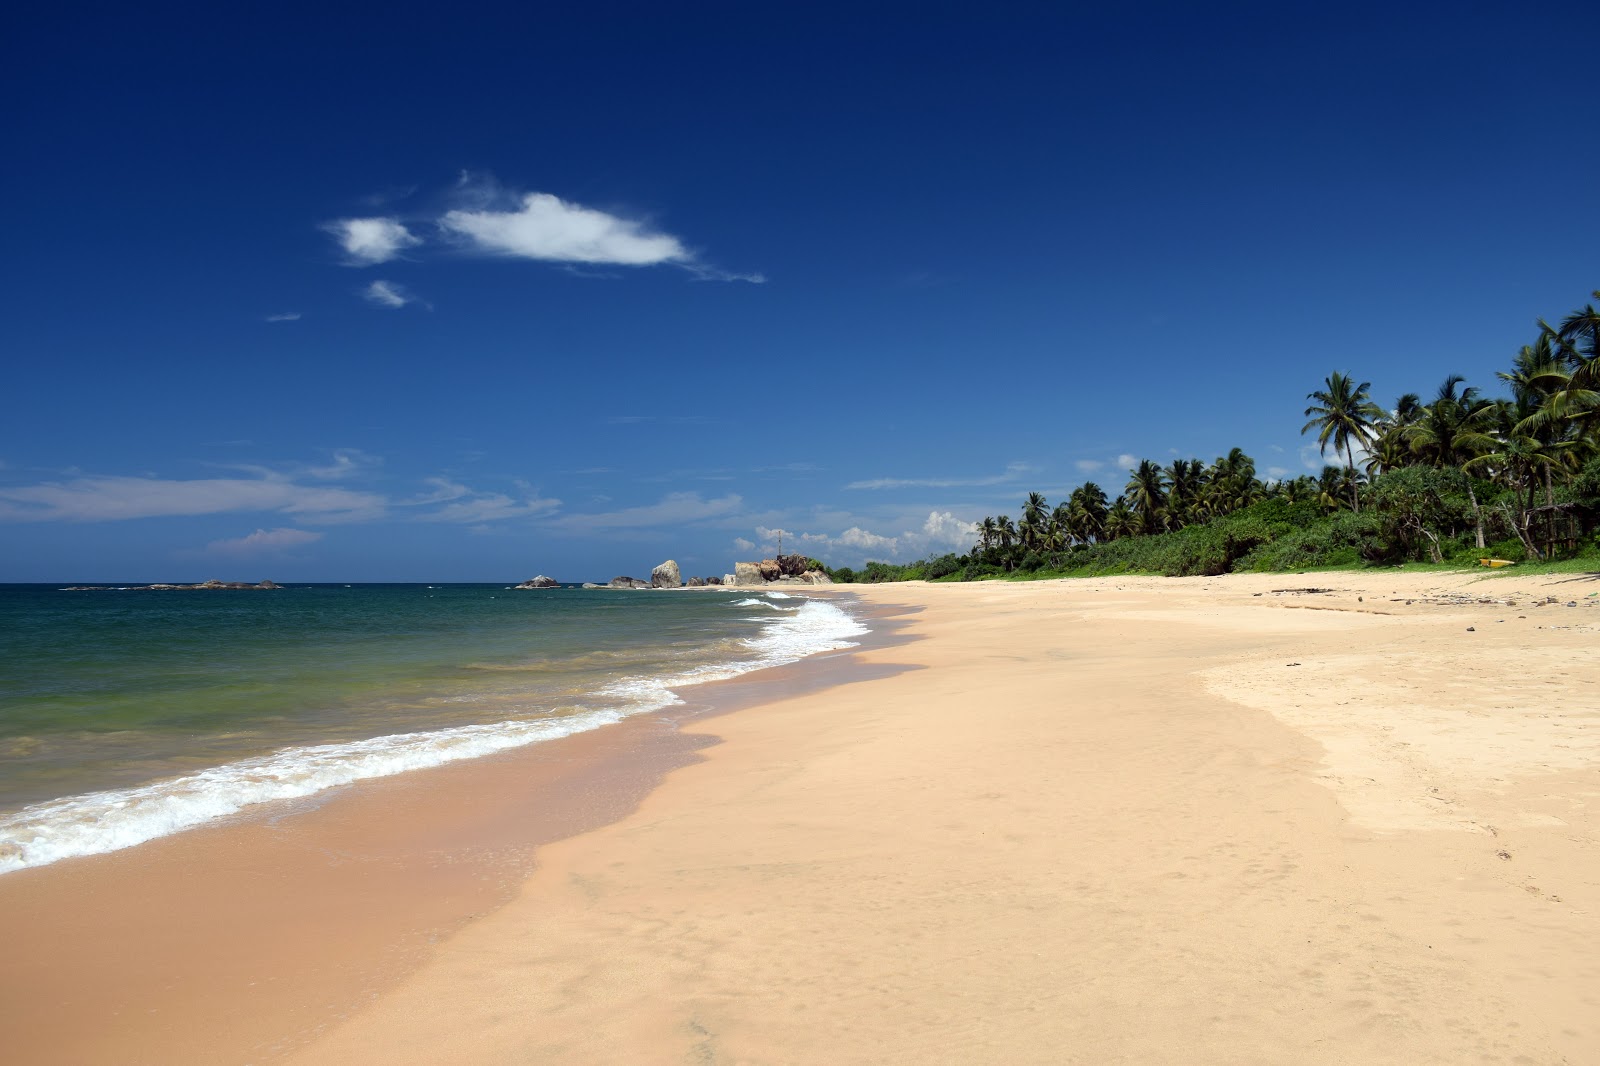 Foto di Balapitiya Beach con una superficie del sabbia luminosa